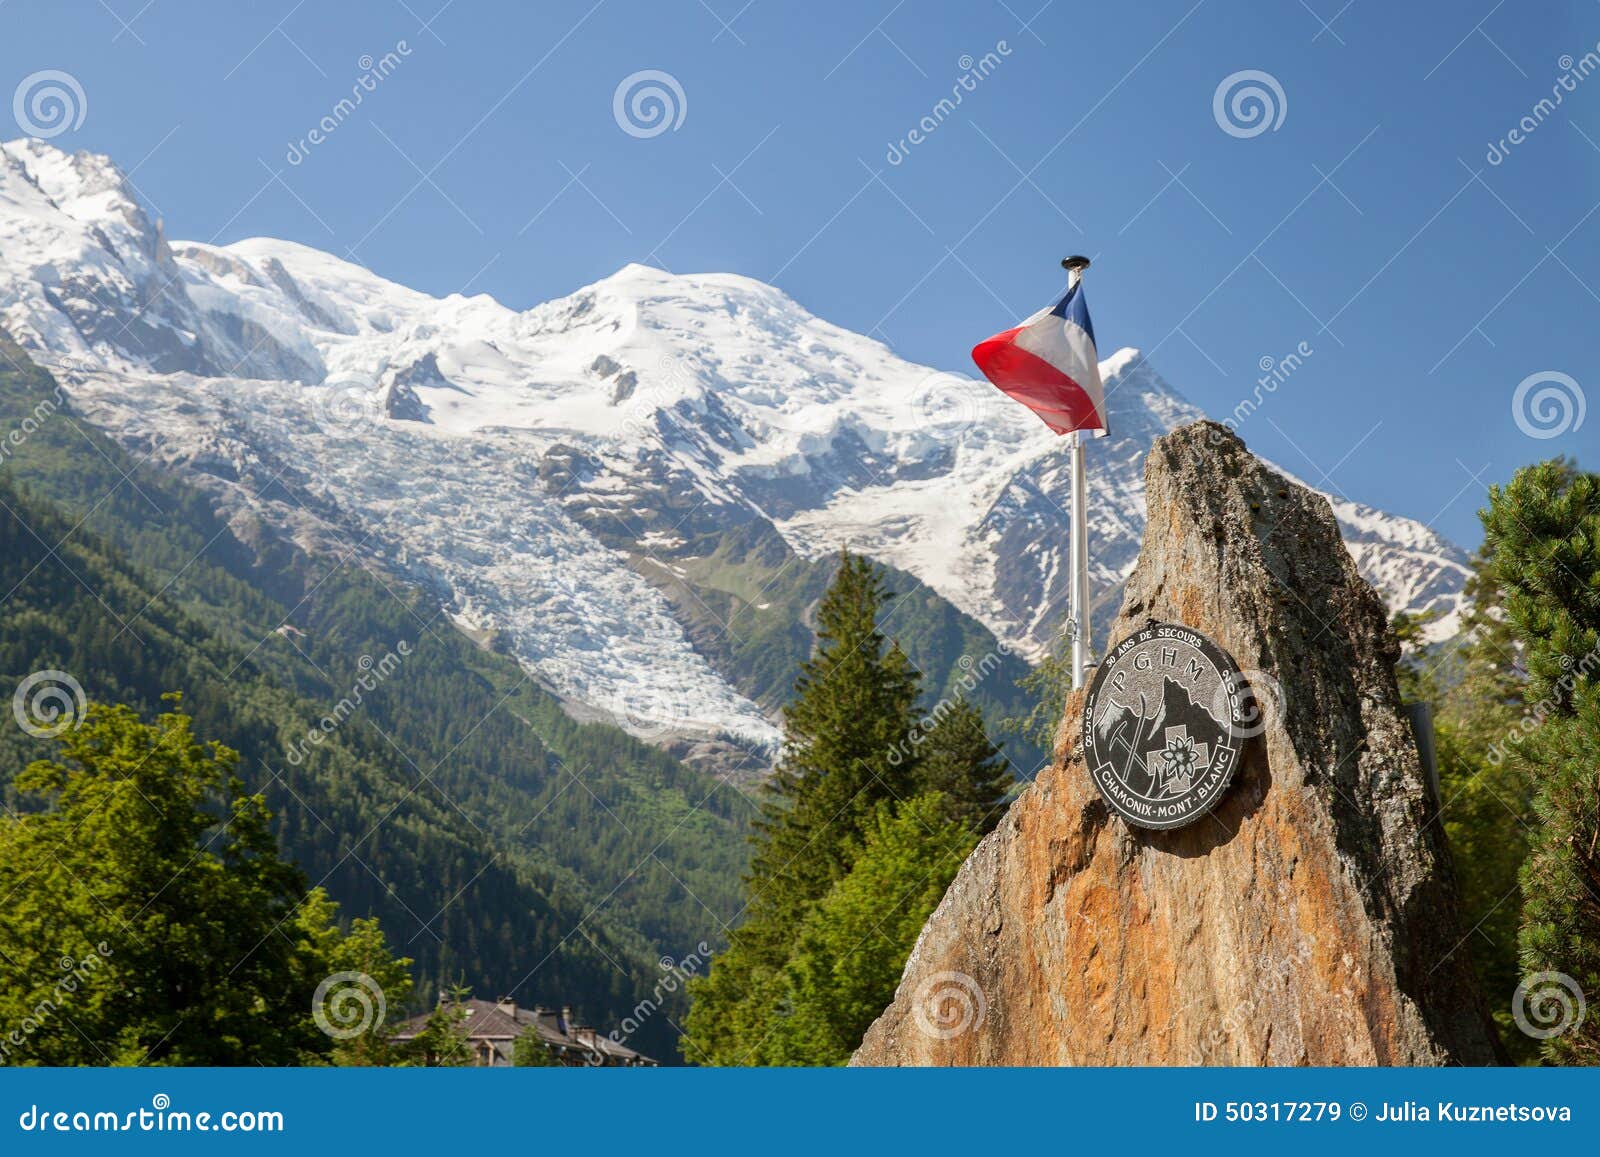 The French Flag And Symbol Of Peloton De Gendarmerie De Haute Montagne Chamonix Editorial Stock Image Image Of Mountain Alps 50317279